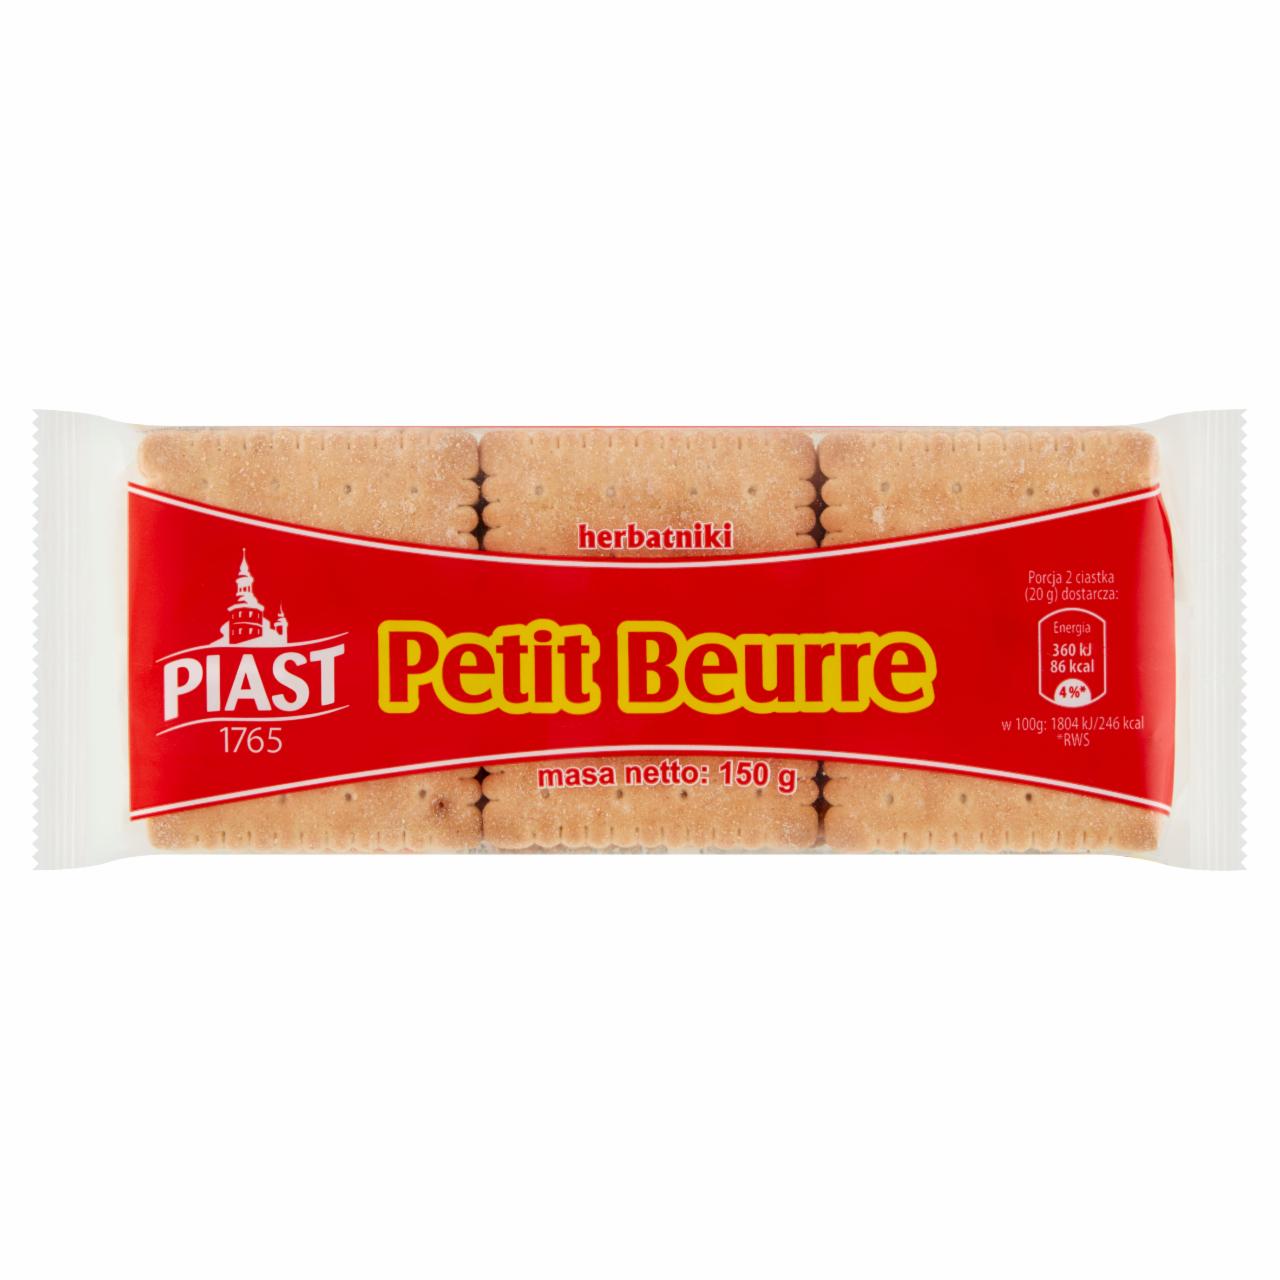 Zdjęcia - Piast Petit Beurre Herbatniki 150 g